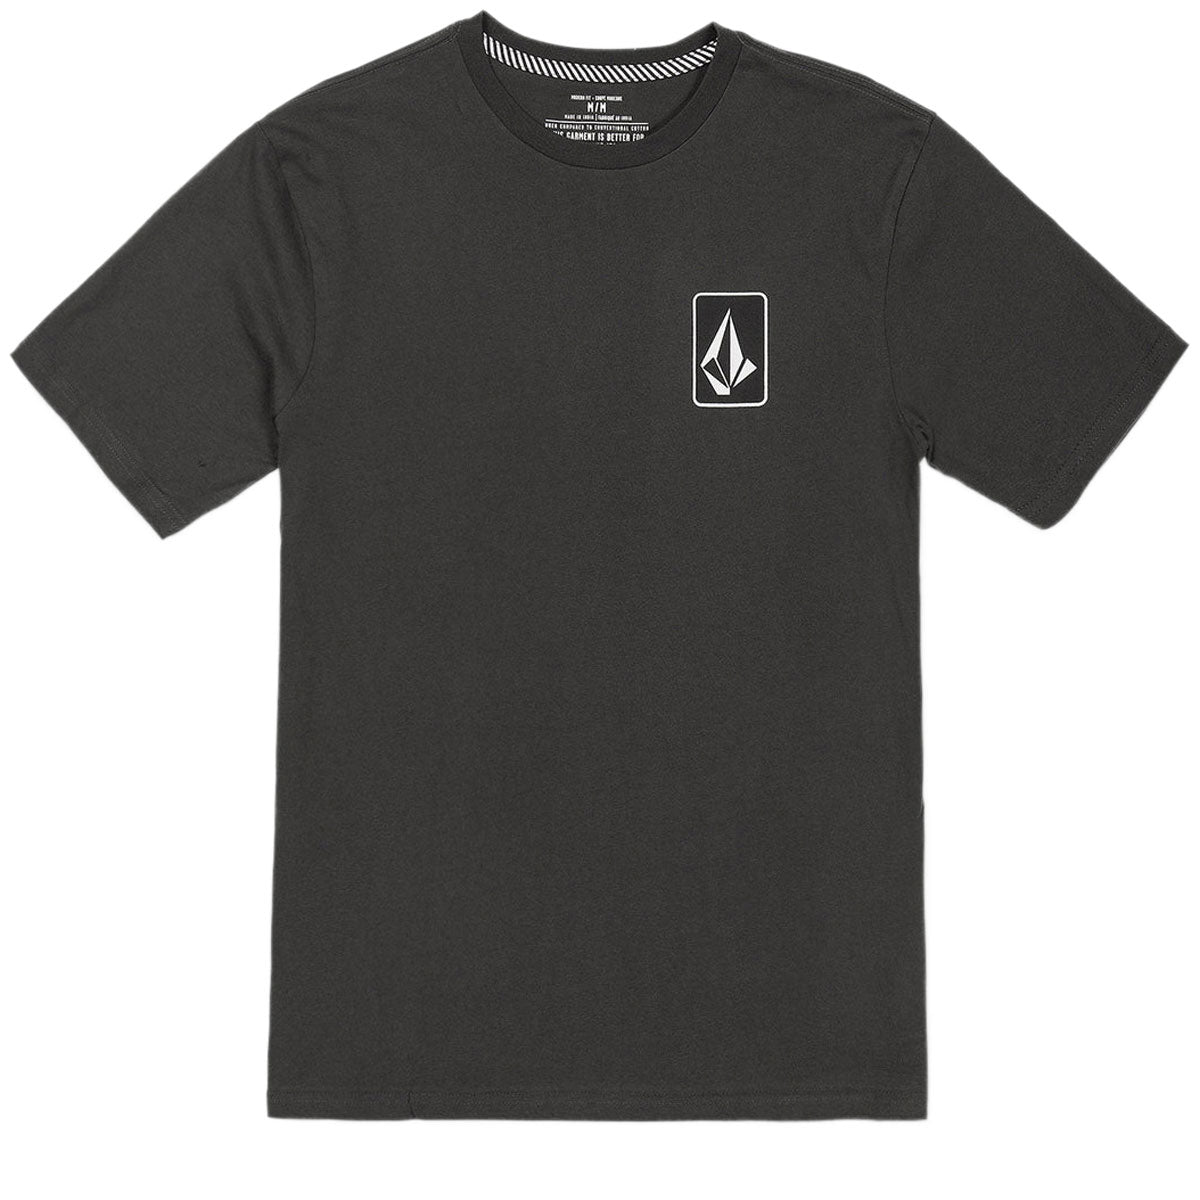 Volcom Skate Vitals Originator T-Shirt - Vintage Black image 1